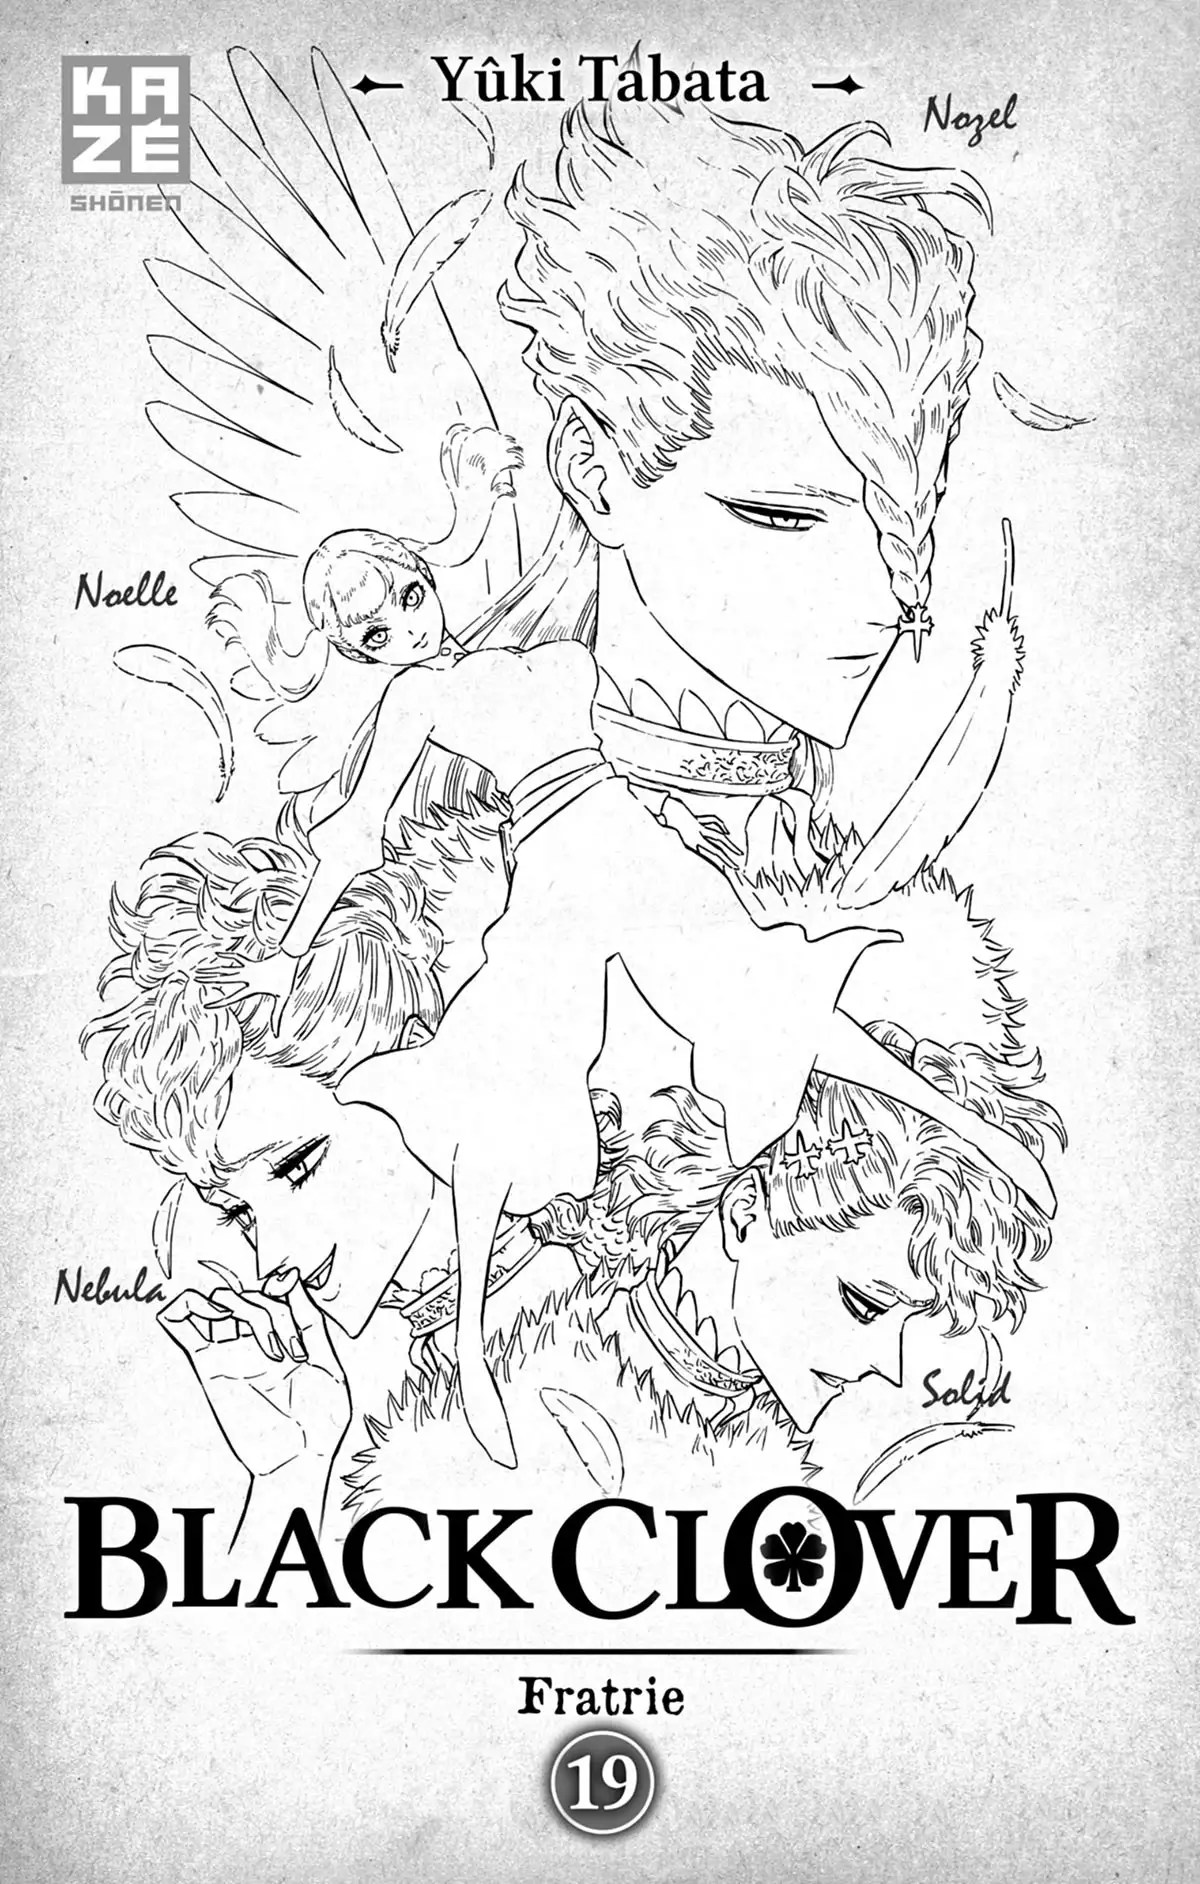 Black Clover Volume 19 page 2